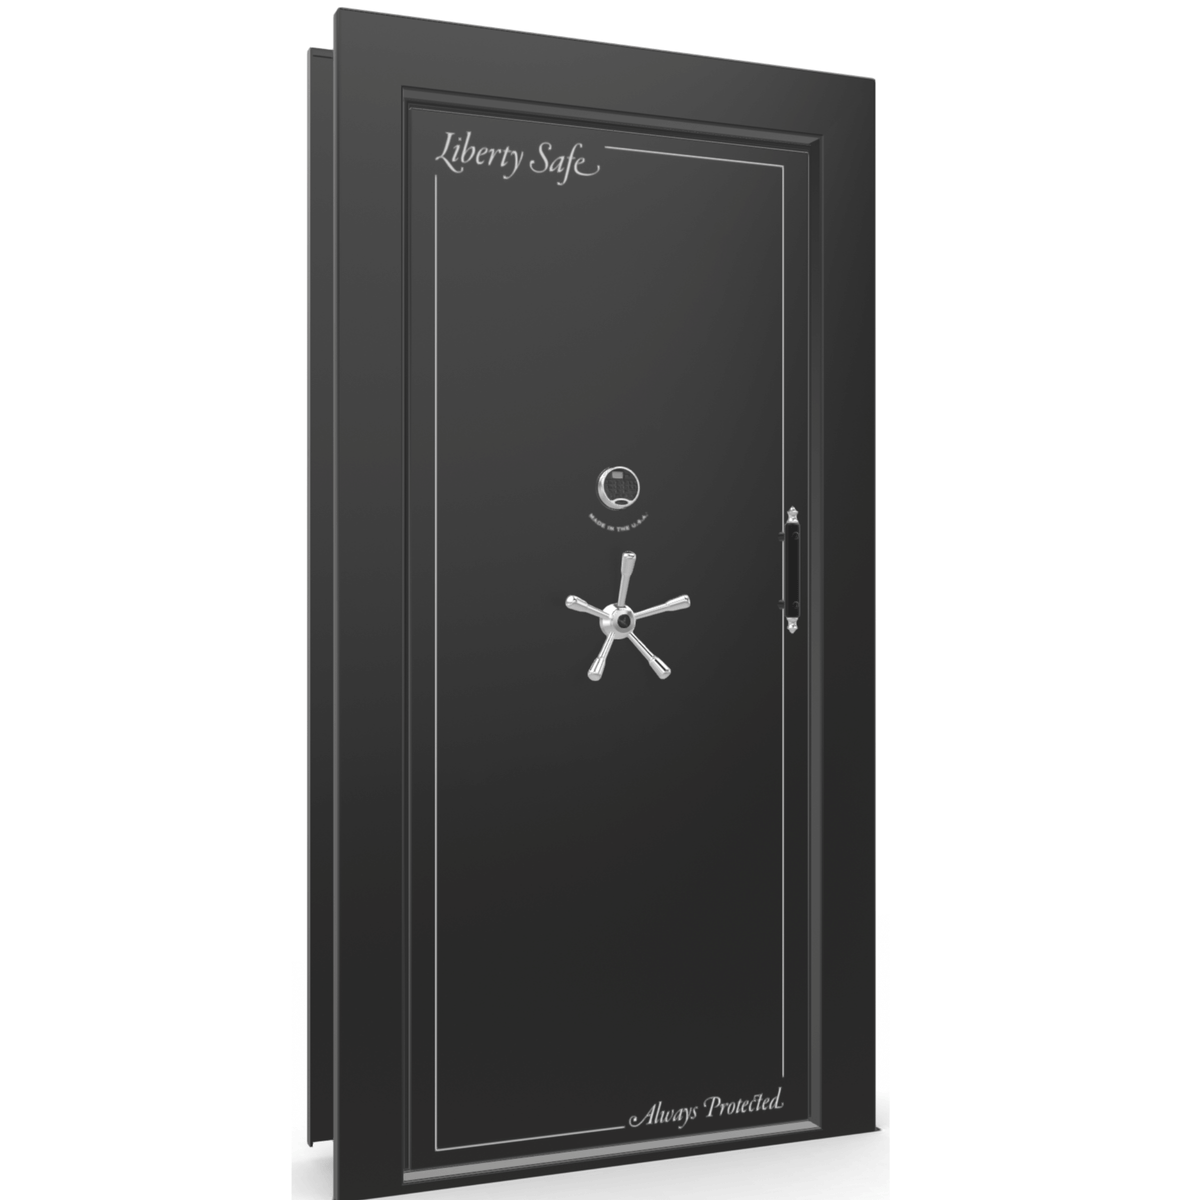 The Beast Vault Door in Black Gloss  with Chrome Electronic Lock, Left Inswing, door closed.